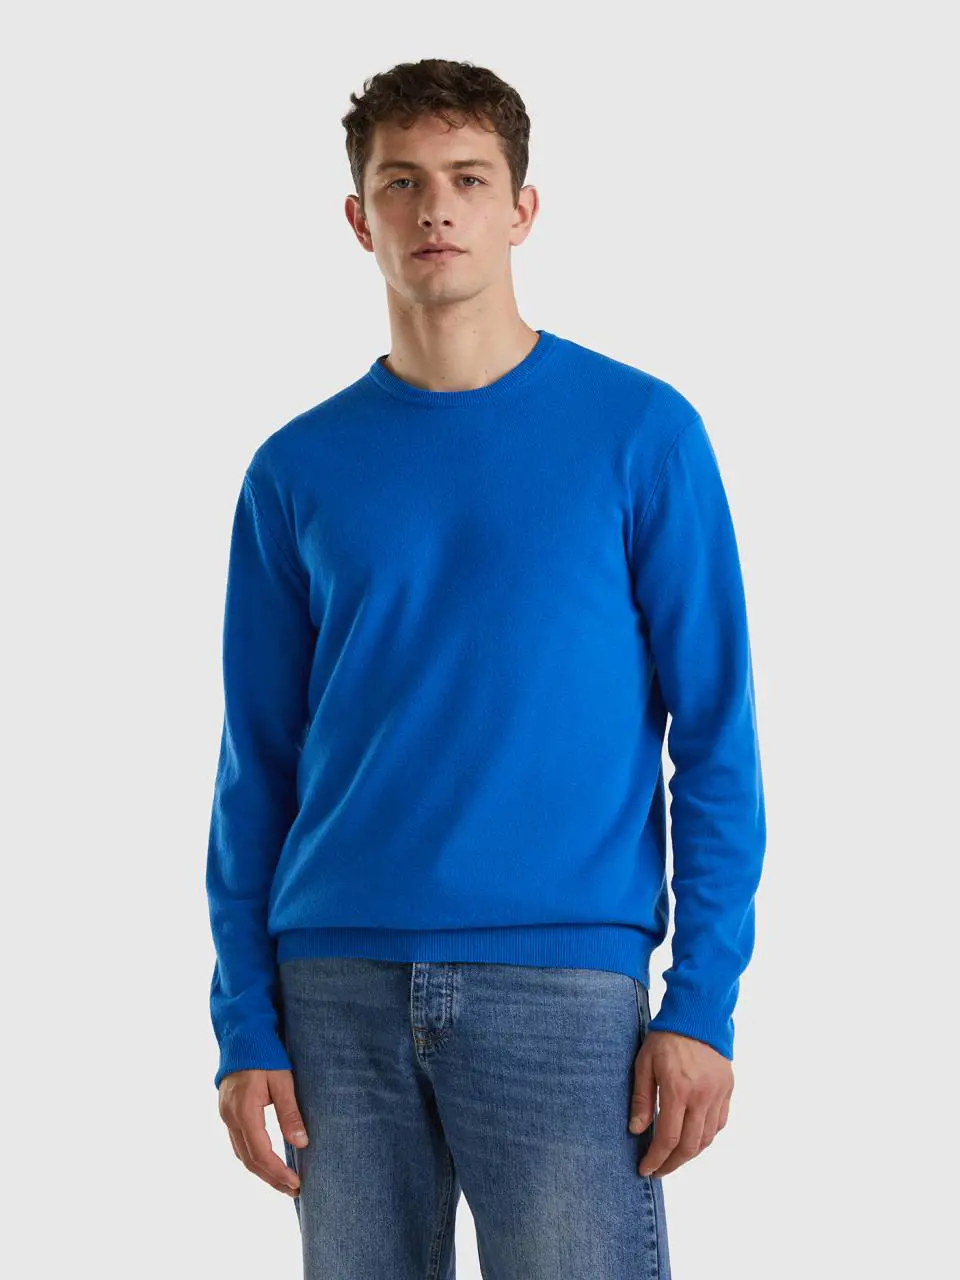 Benetton cornflower blue crew neck sweater in pure merino wool. 1